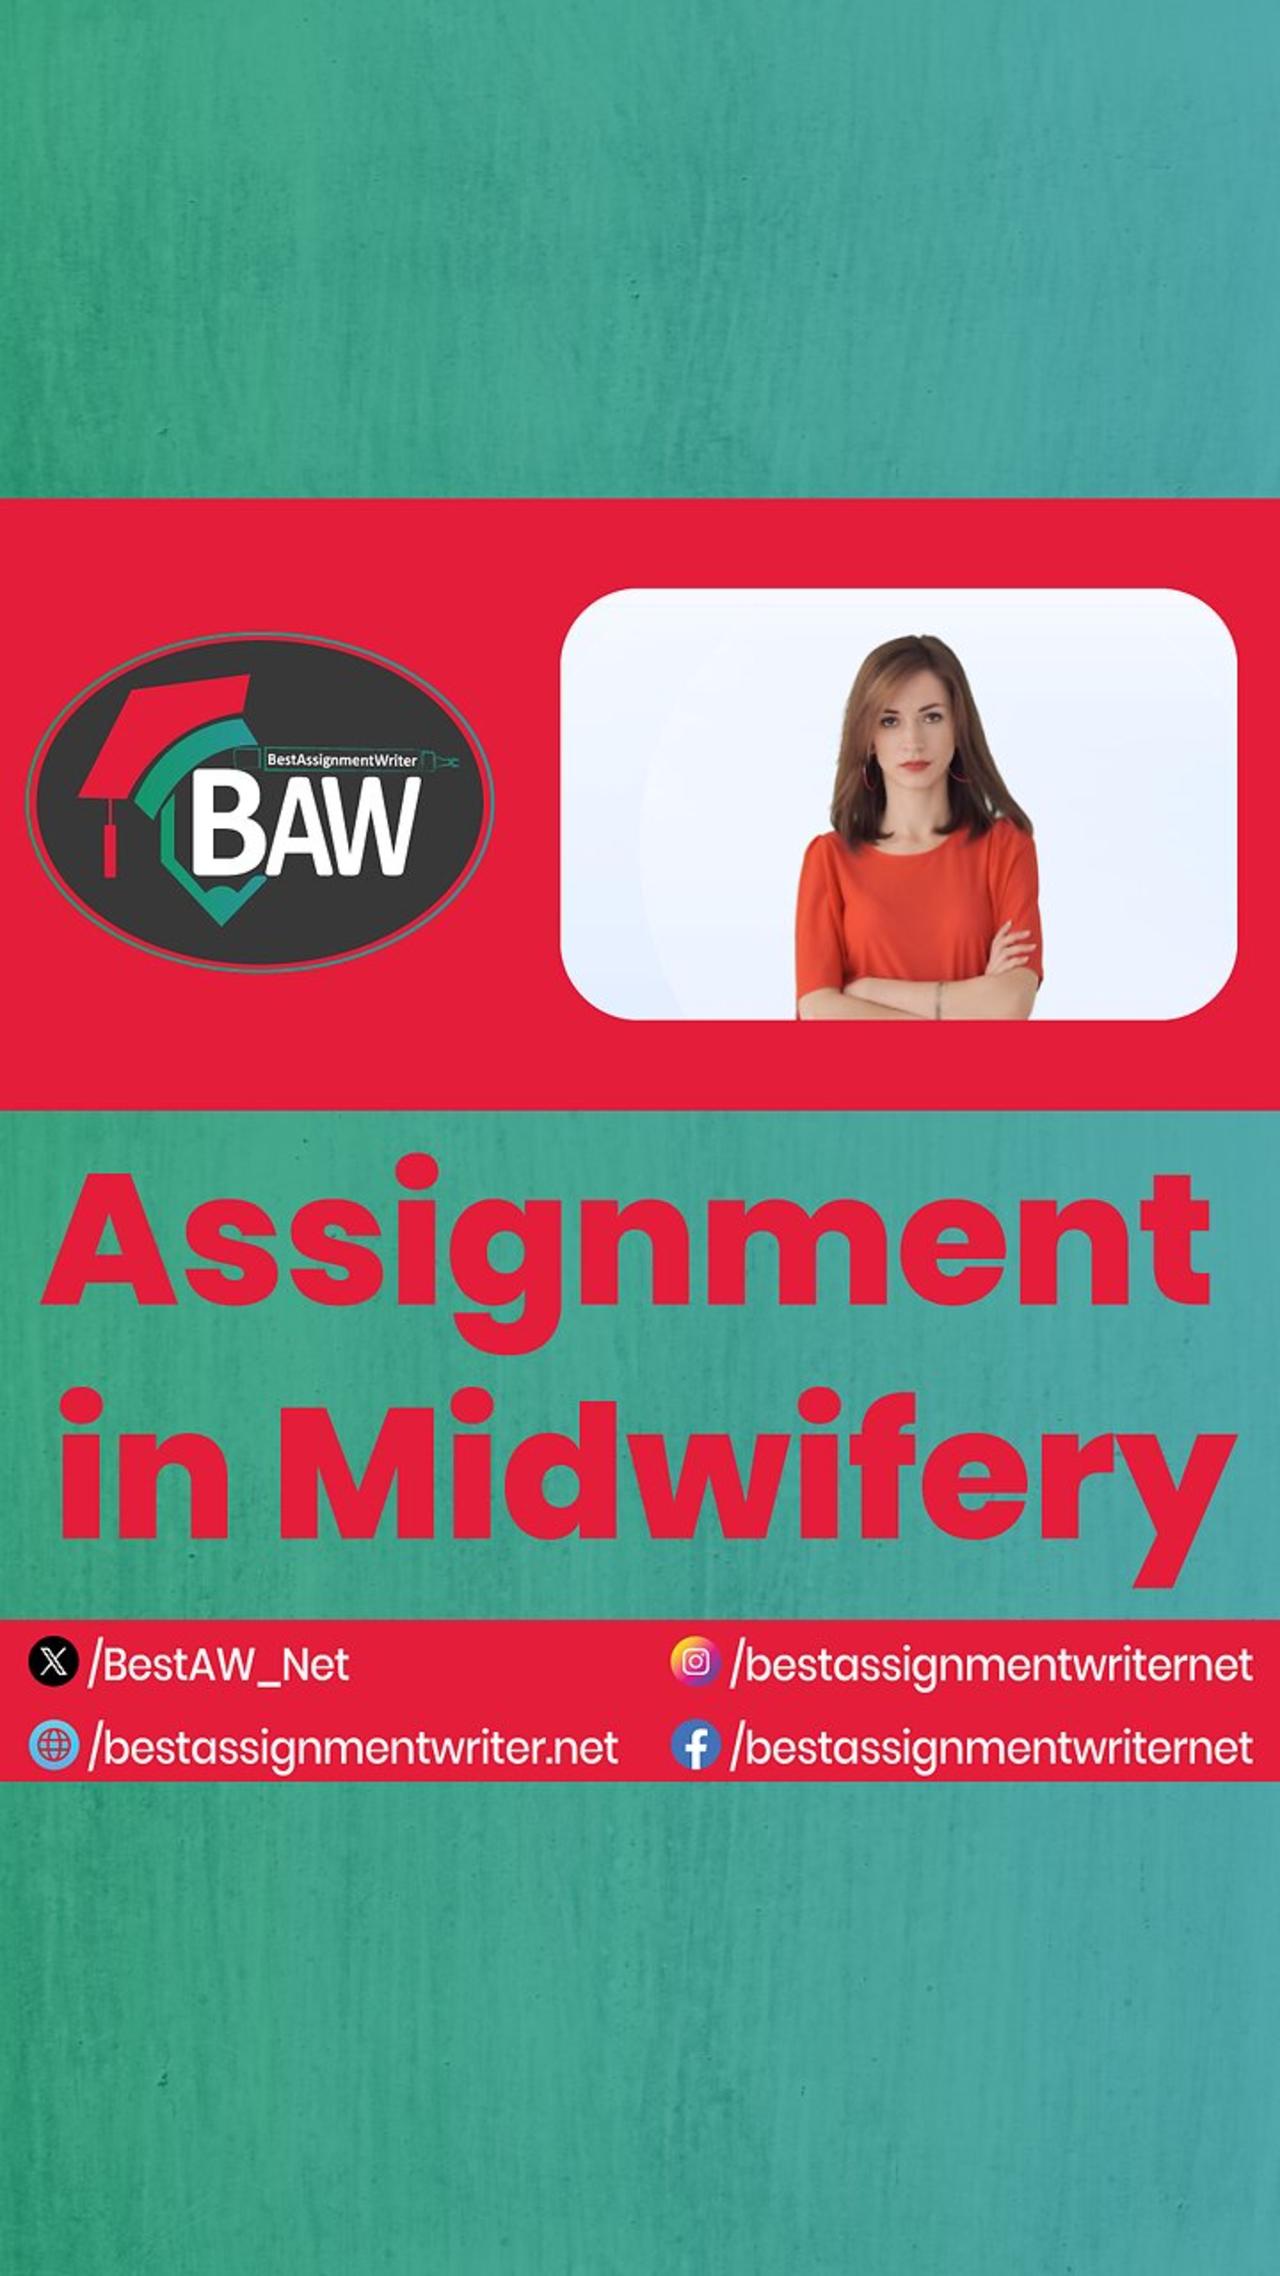 Assignment in Midwifery | bestassignmentwriter.net